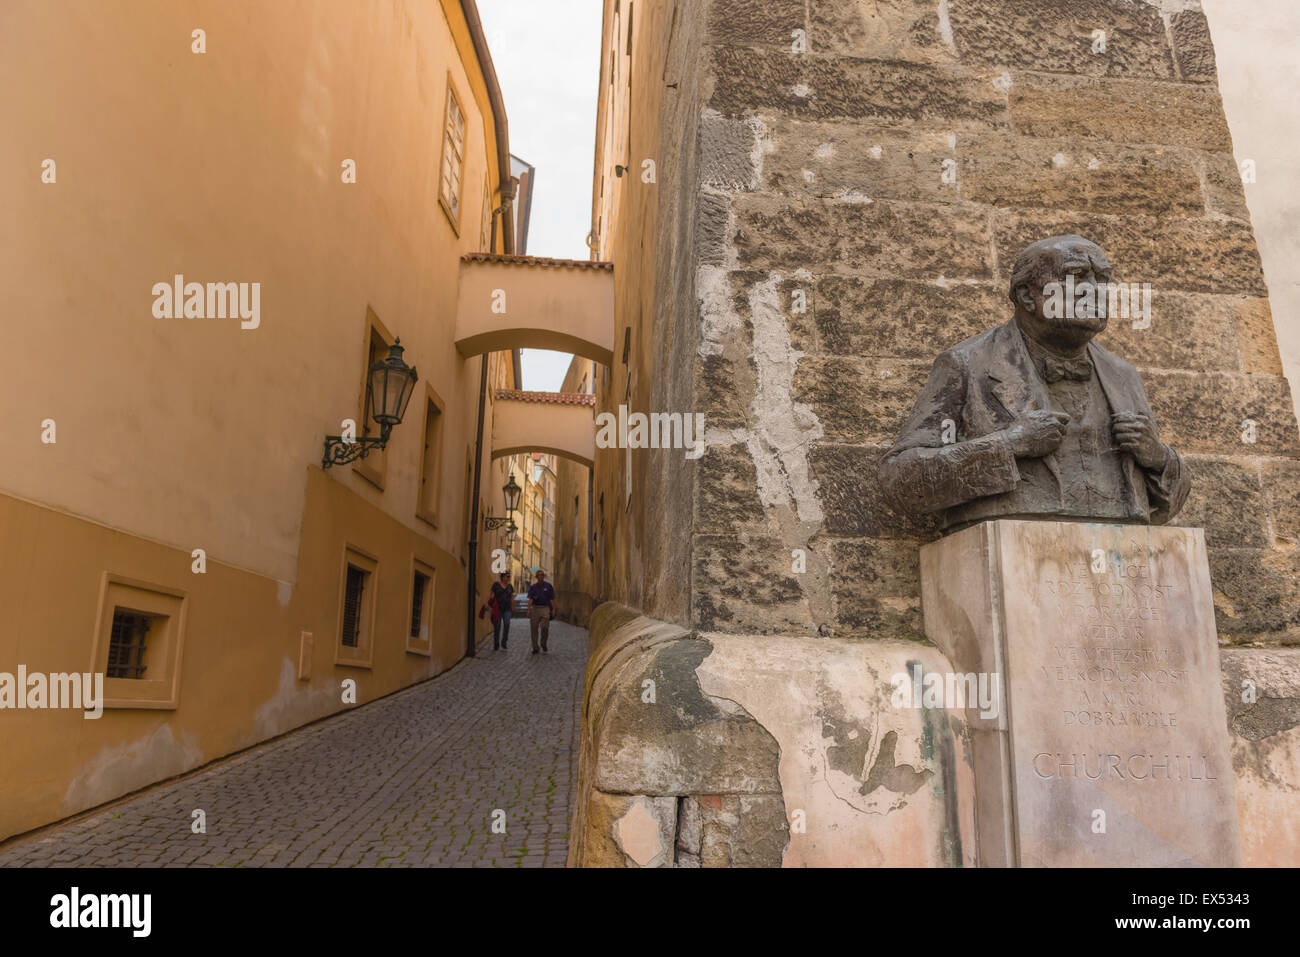 Estatua de Churchill,escultura, un busto del Primer Ministro británico Winston Churchill en el barrio del castillo (Hradcany) de Praga, República Checa. Foto de stock